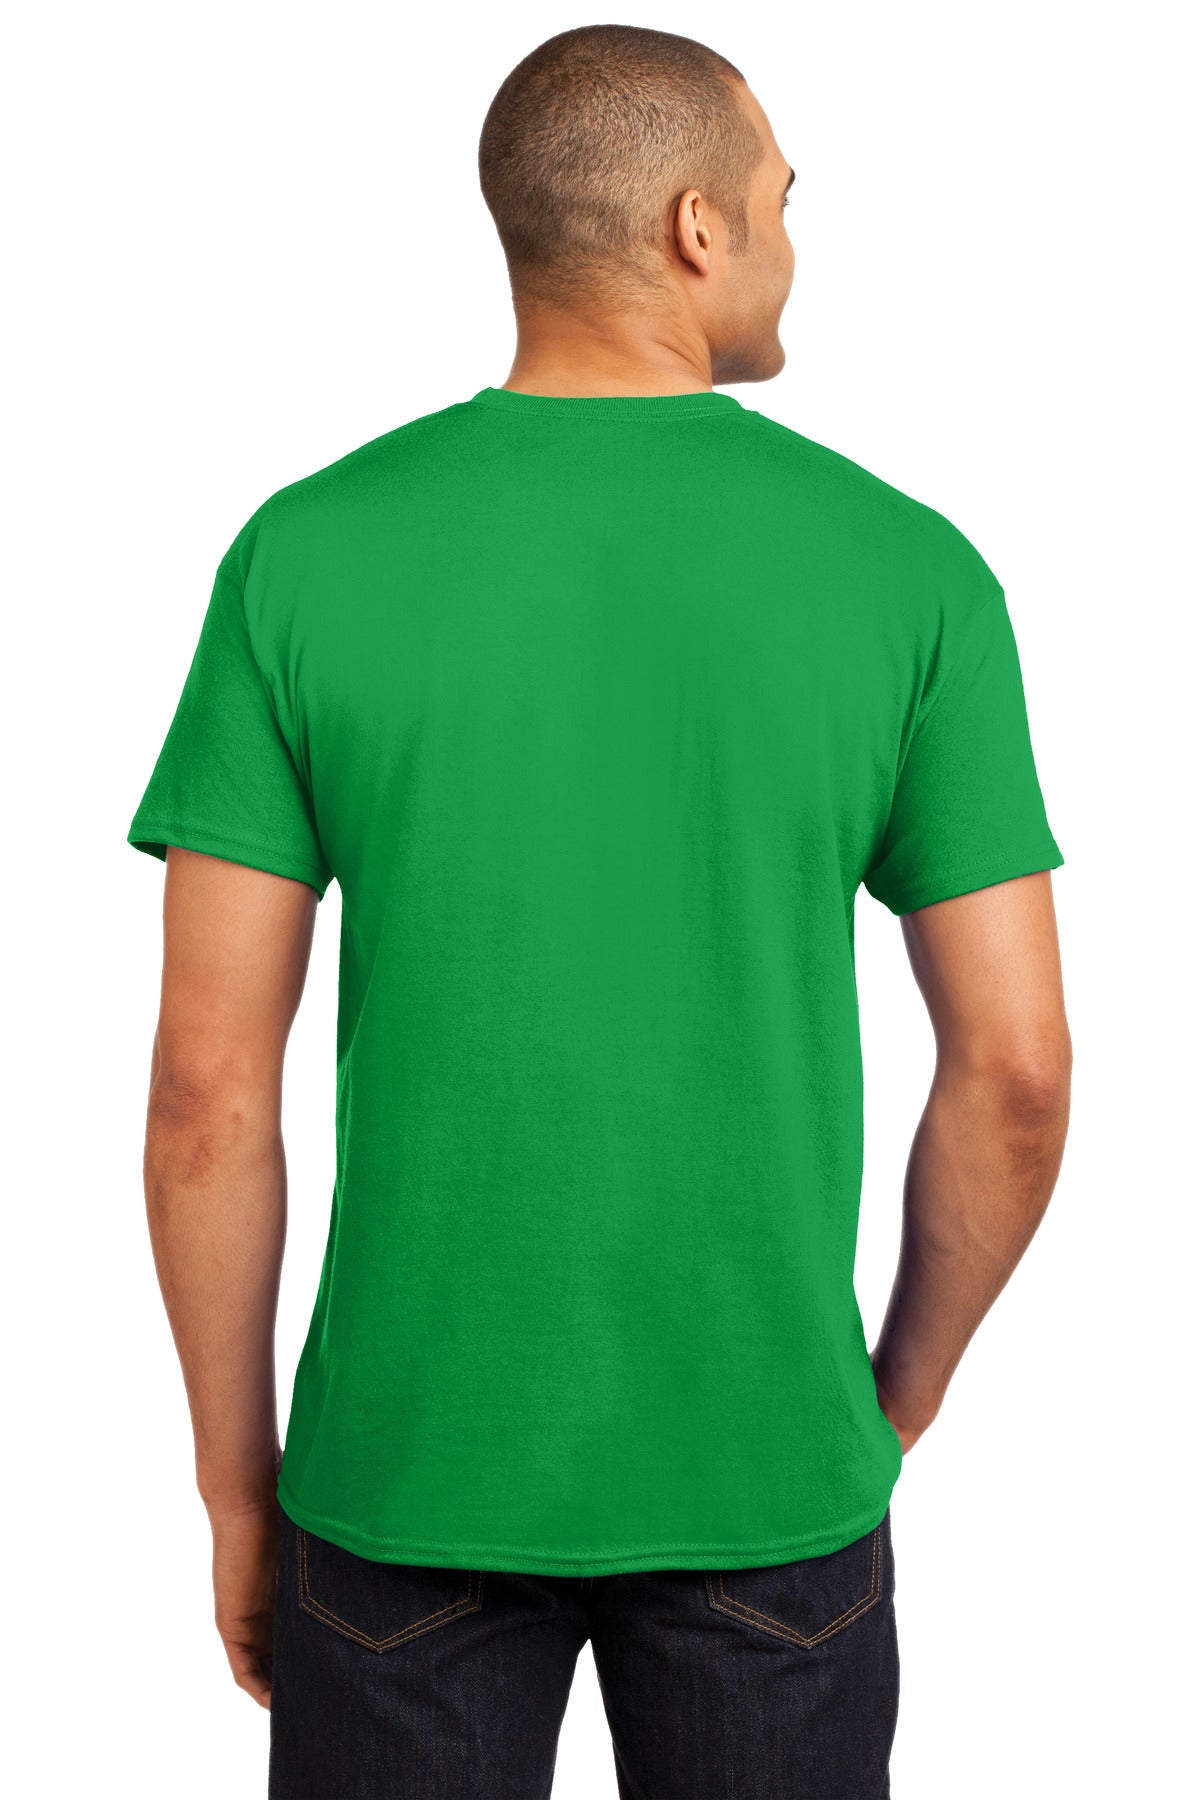 Hanes® - EcoSmart® 50/50 Cotton/Poly T-Shirt. 5170 [Kelly Green